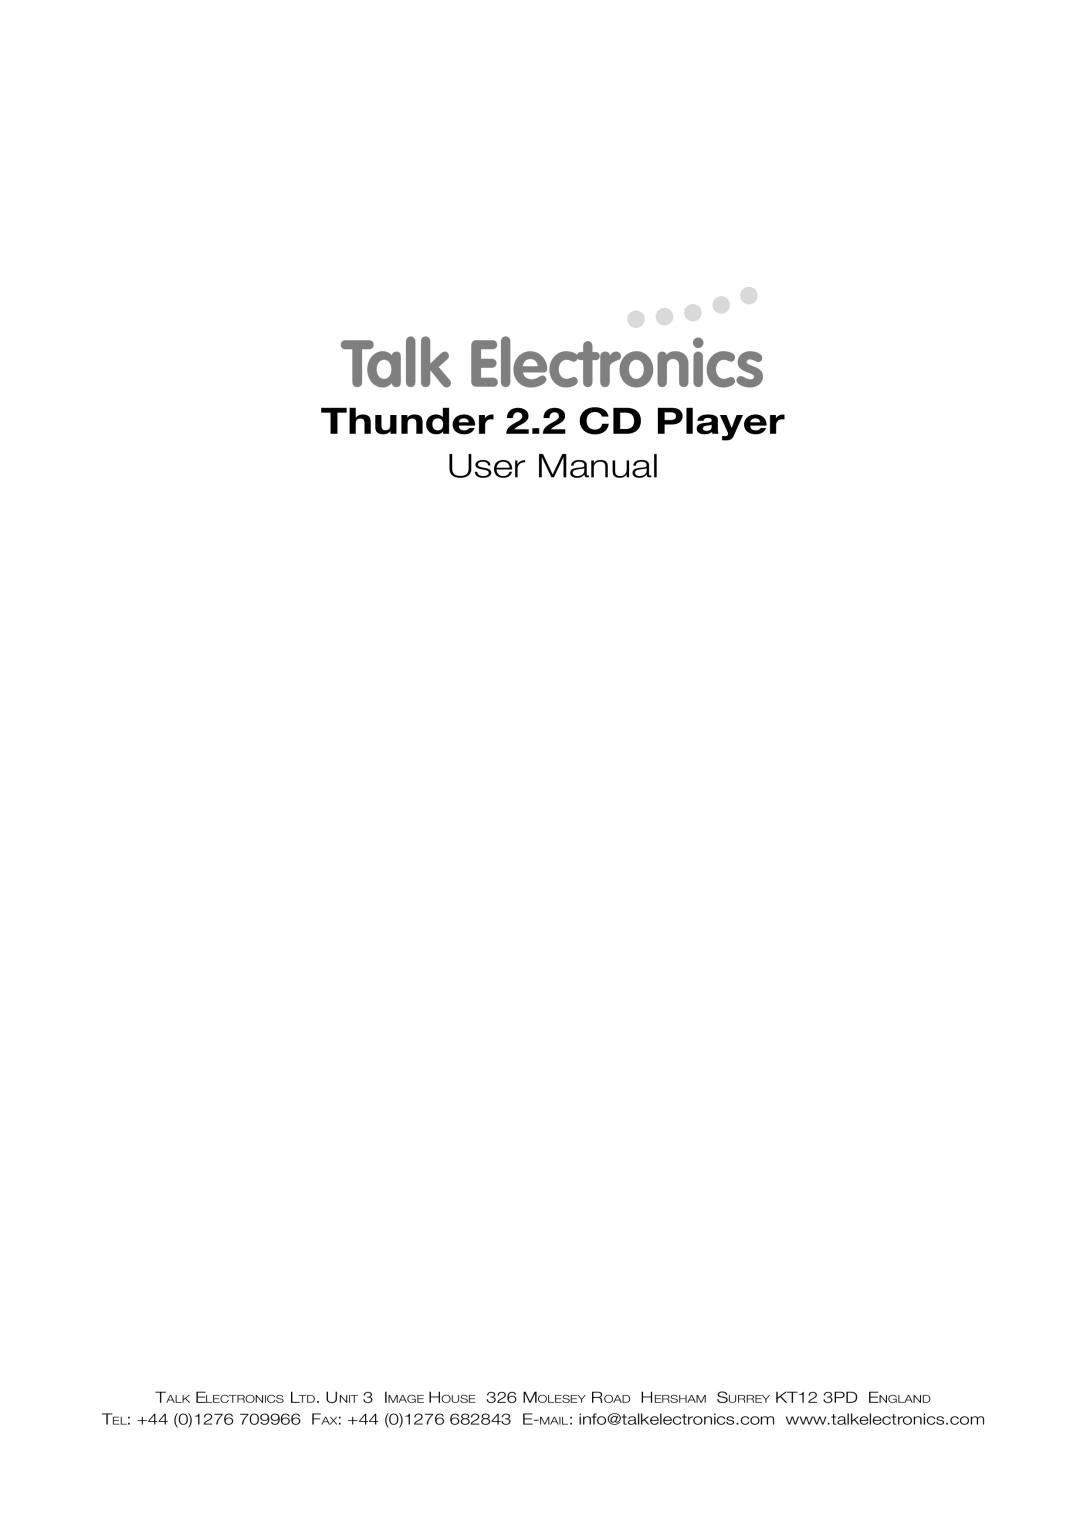 Talk electronic user manual Talk Electronics, Thunder 2.2 CD Player 